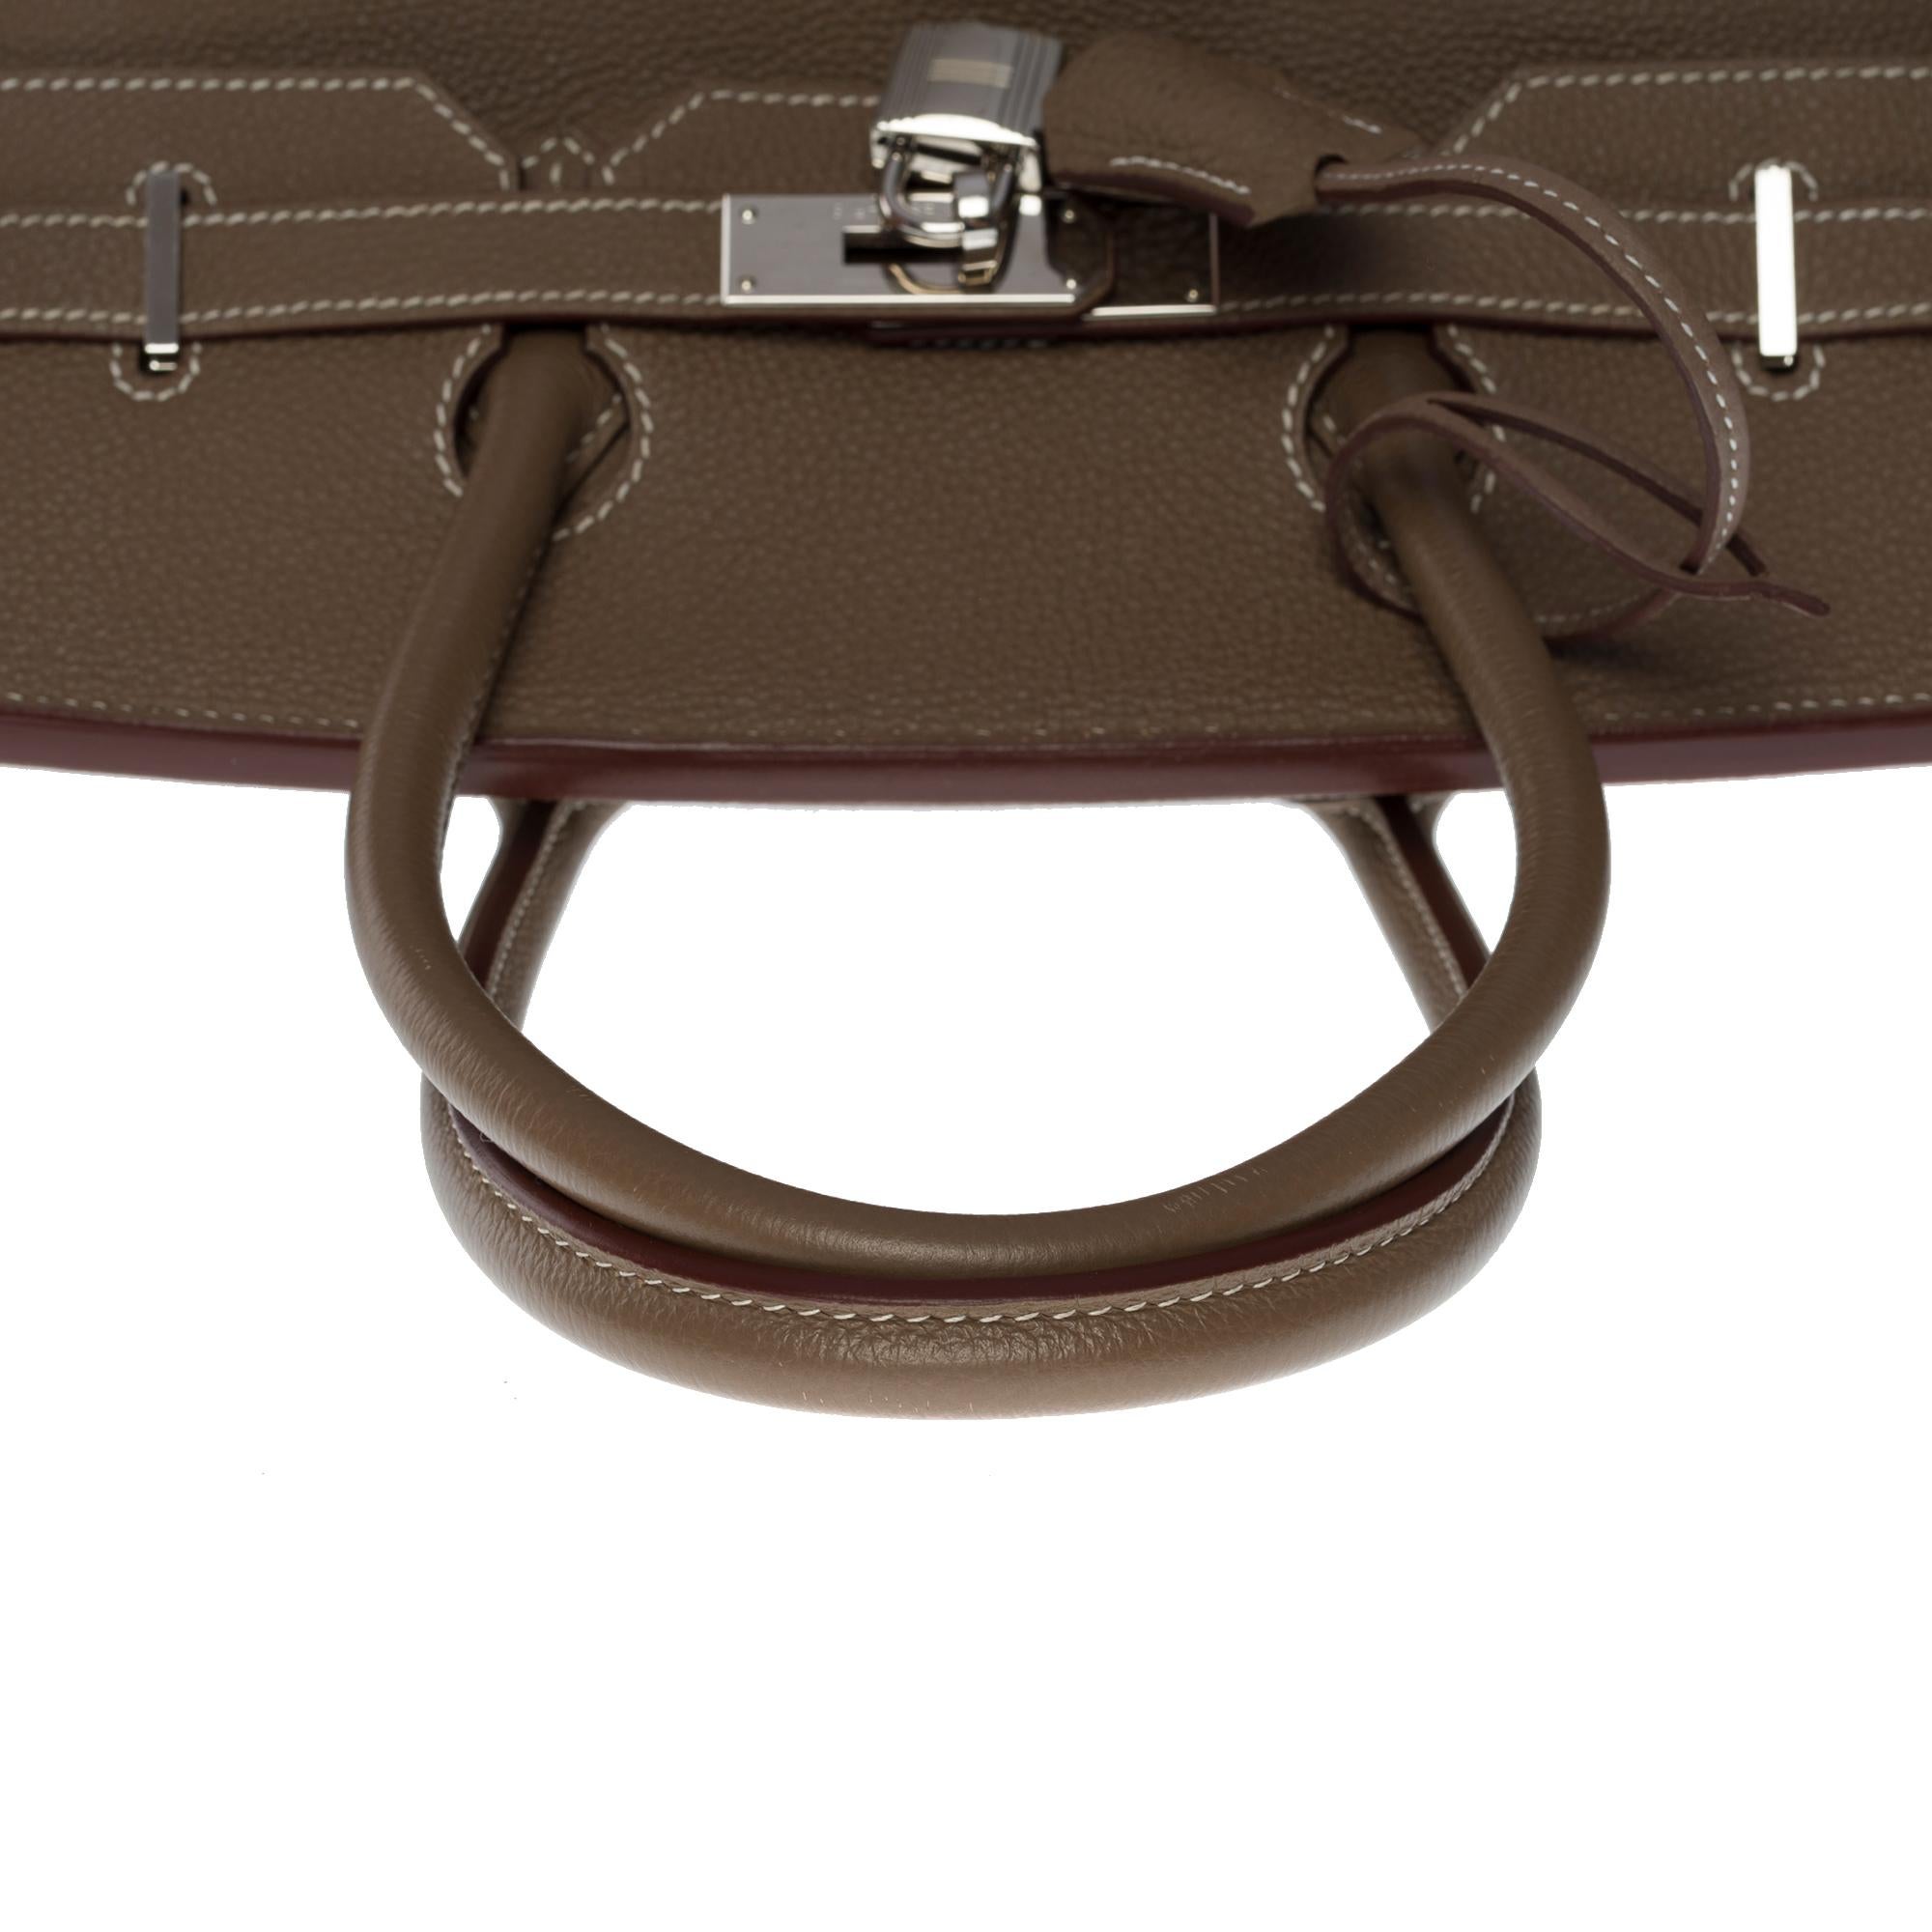 Stunning Hermès Birkin 35 handbag in etoupe Togo leather, SHW 4